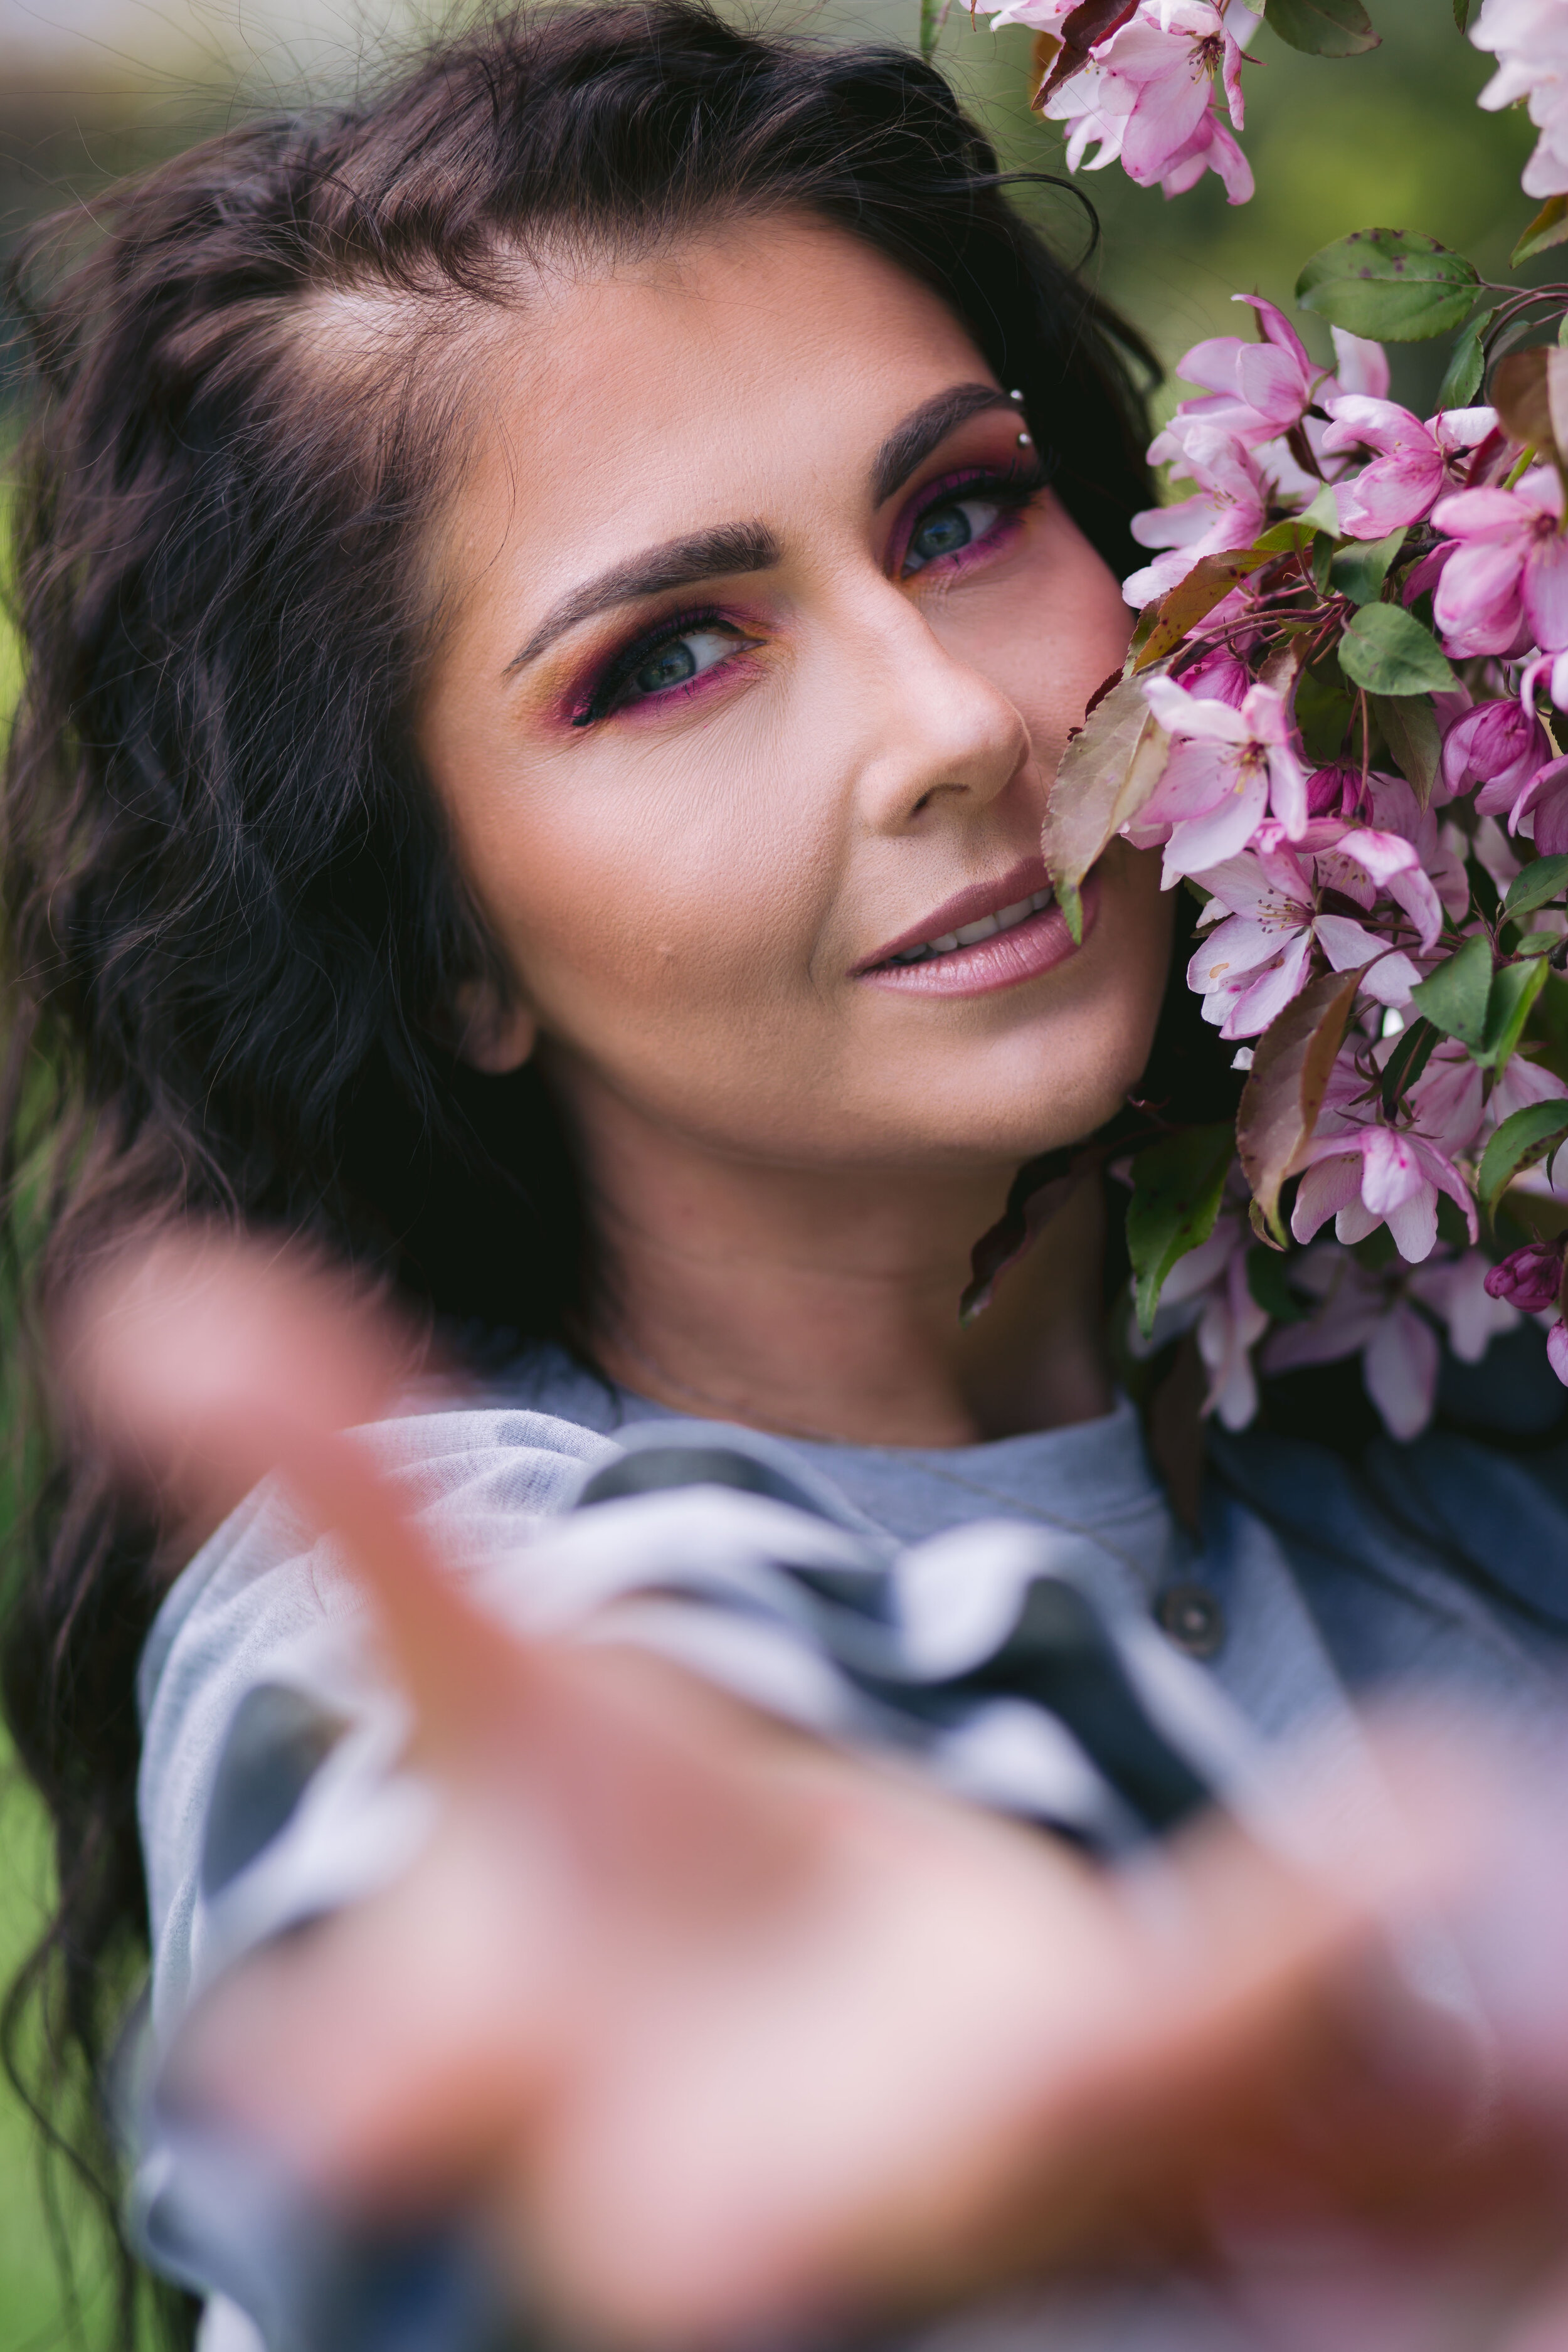 Amazing Spring Makeup photo shoot - Schaumburg IL Photographer